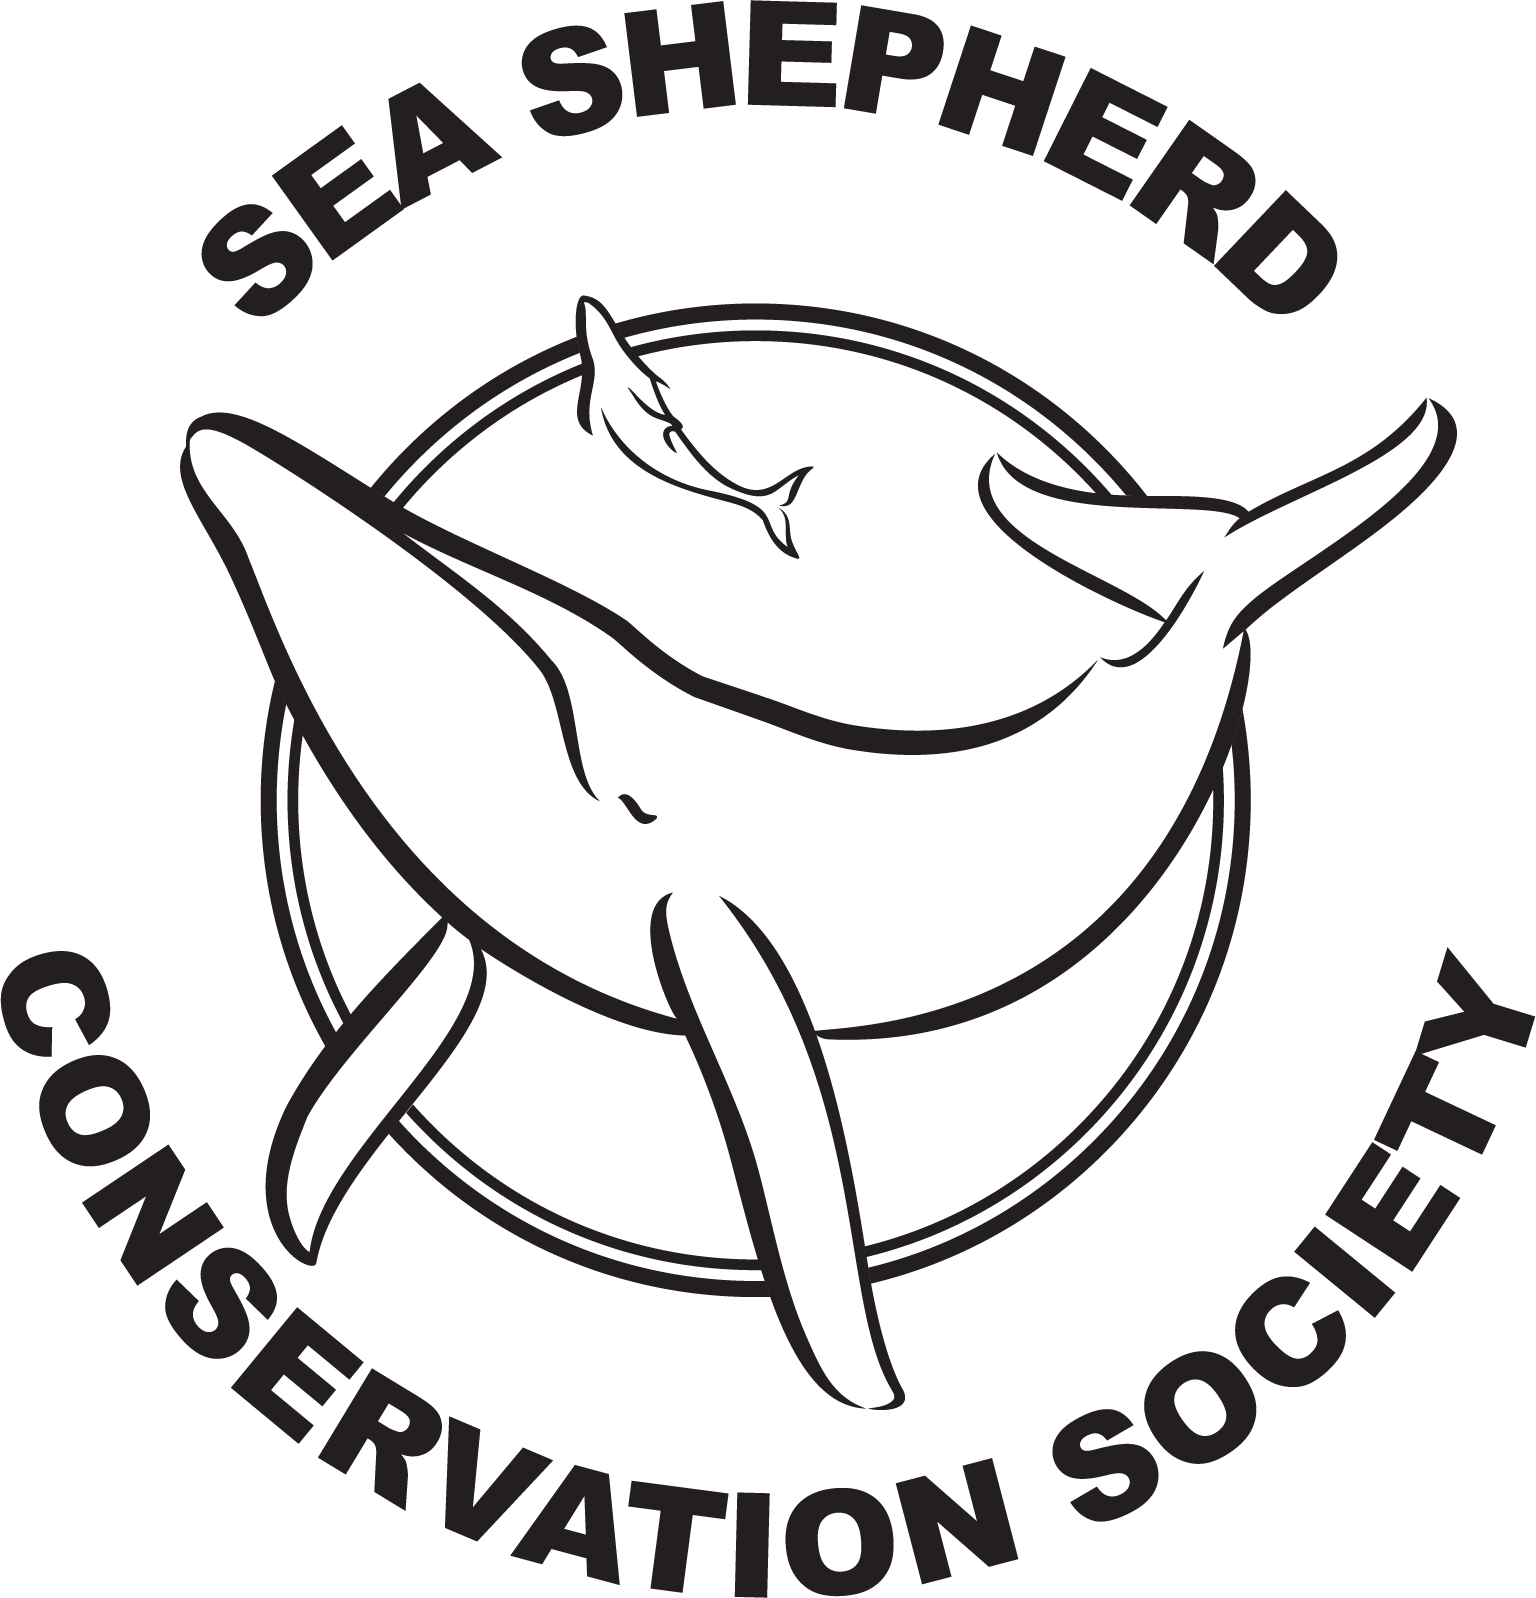 Sea Shepherd Logo